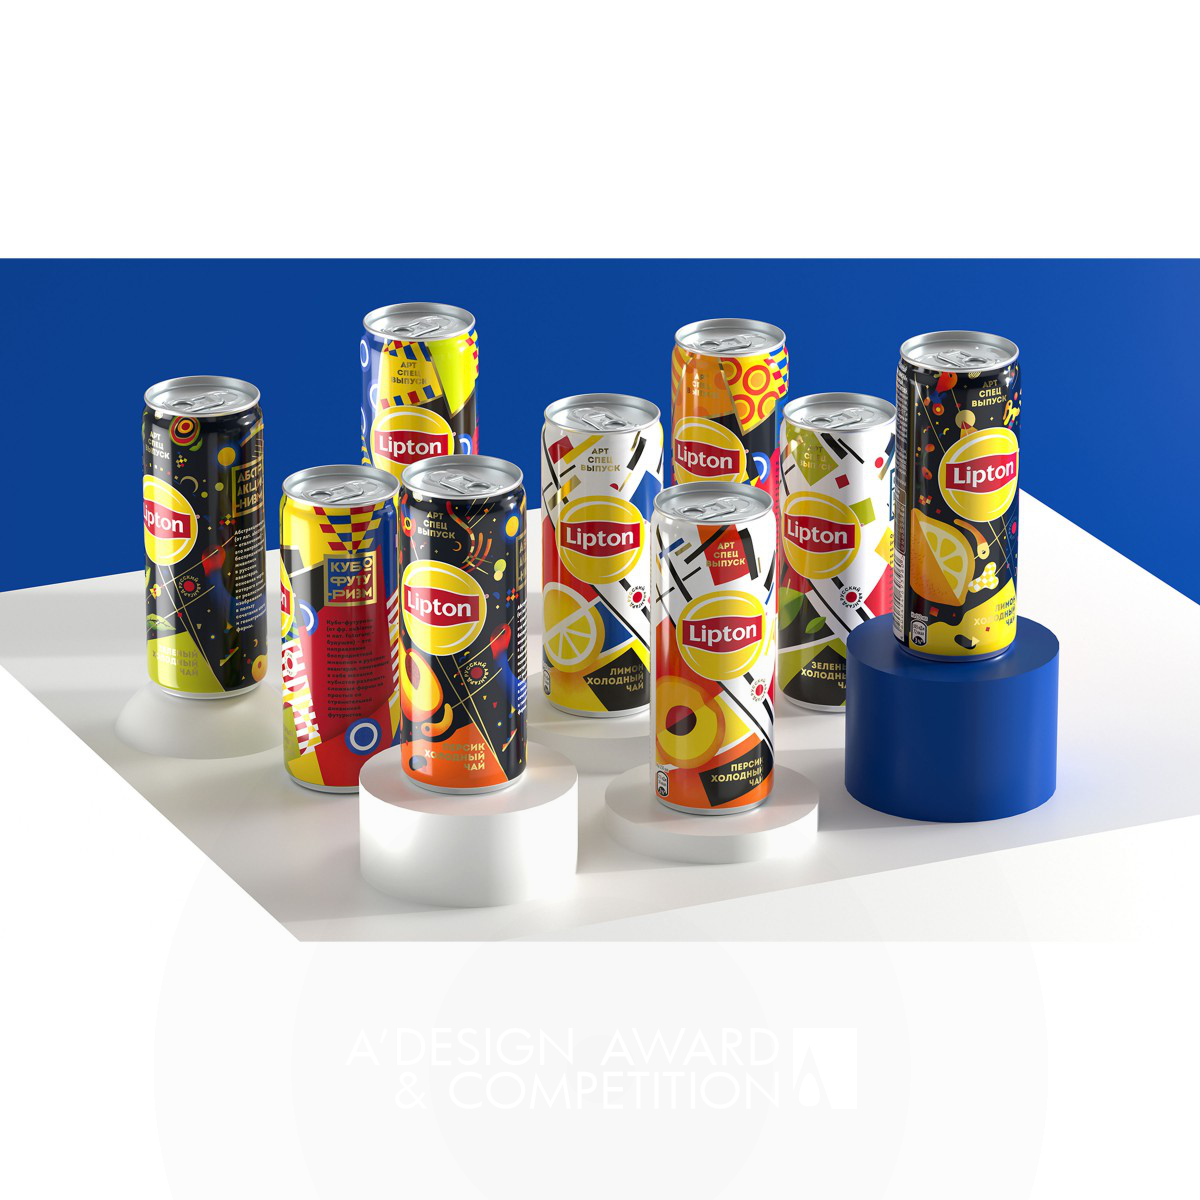 Lipton Avant Garde Special Art Edition Beverage by PepsiCo Design & Innovation